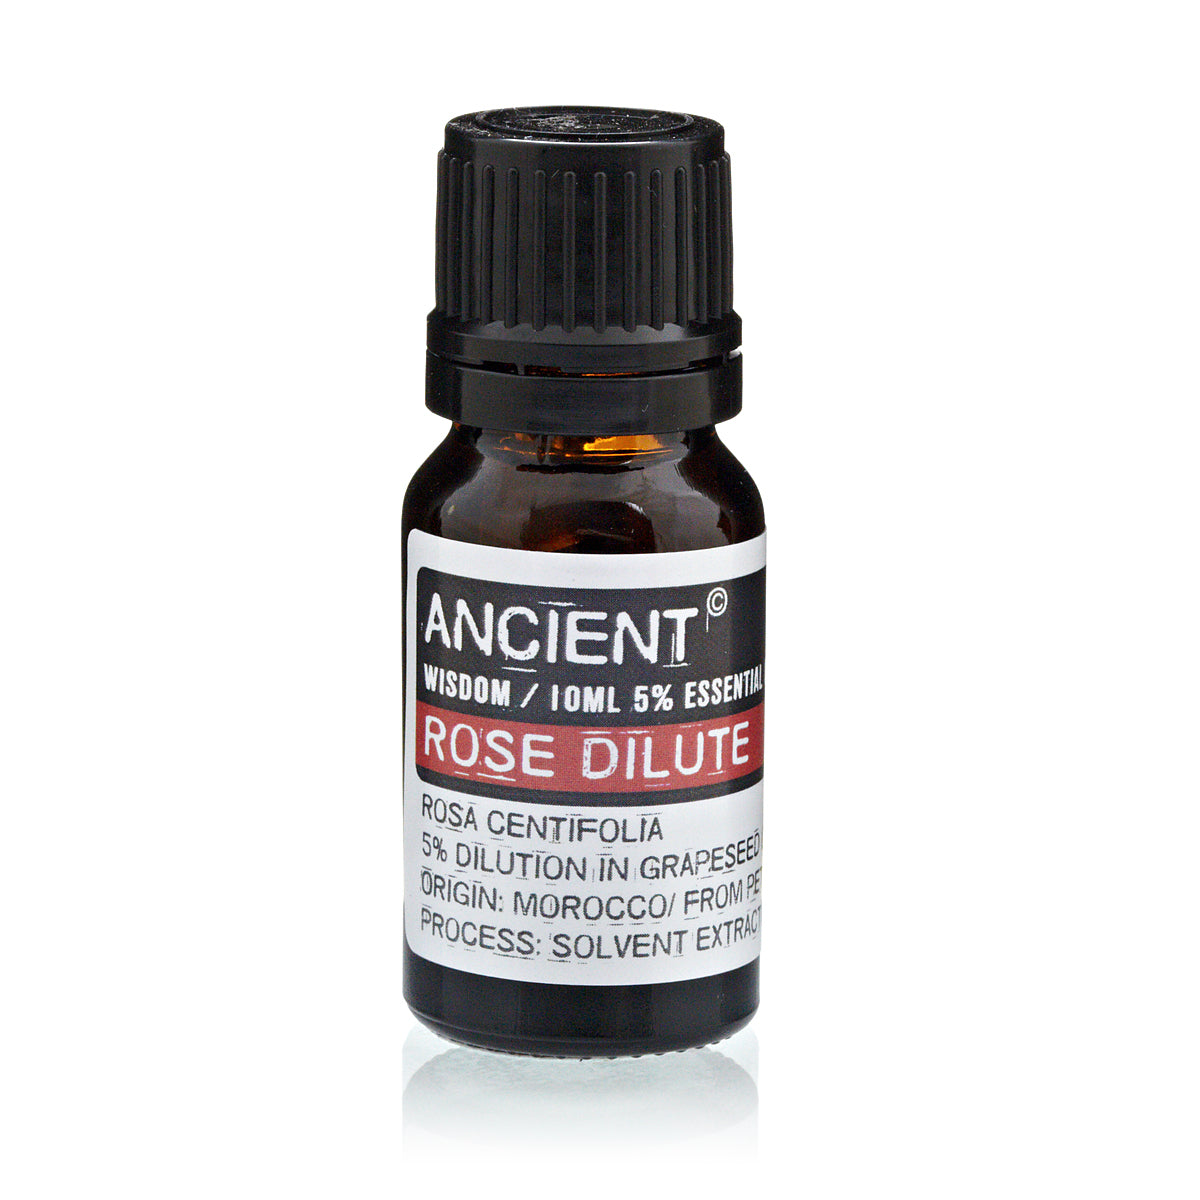 Dilute Rose Essential Oil